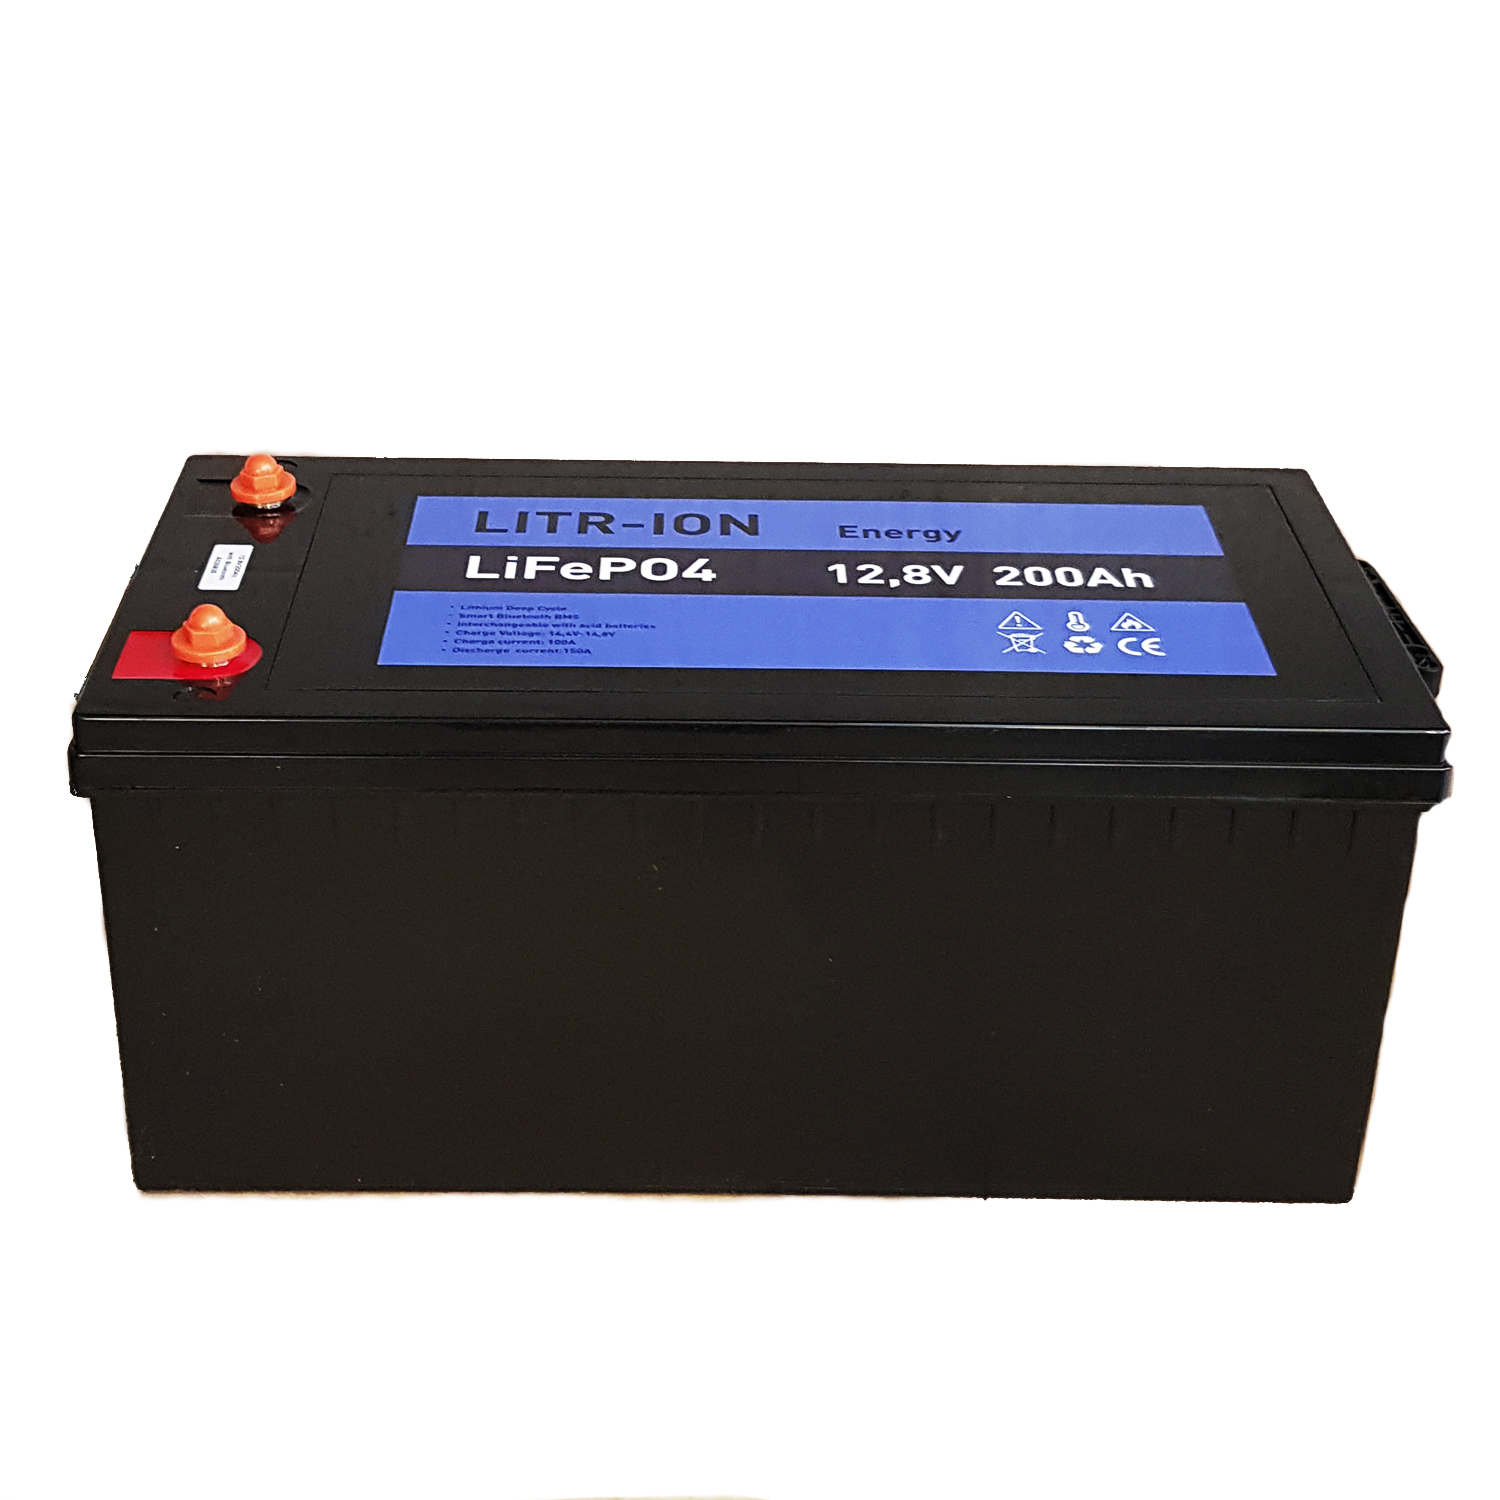 Bateria litio Litr-Ion Lithium ( LiFePO4 ) Smart BT BMS 12'8V 100Ah